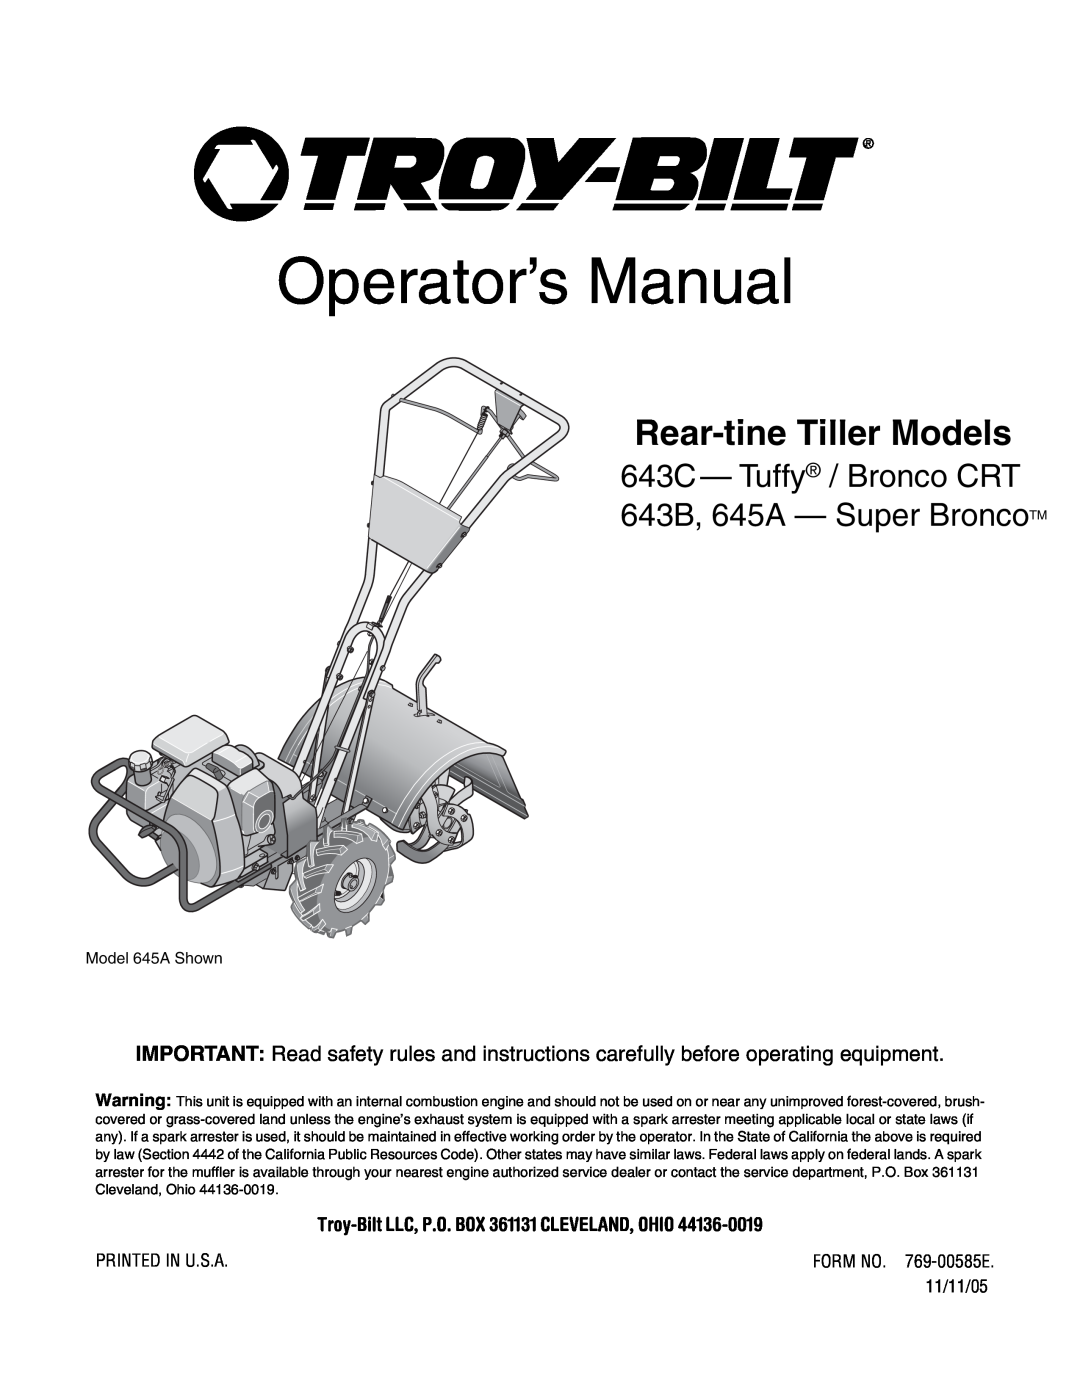 Troy-Bilt 643D manual Operator’s Manual, Rear-tine Tiller Models, 643C - Tuffy / Bronco CRT 643B, 645A - Super BroncoTM 